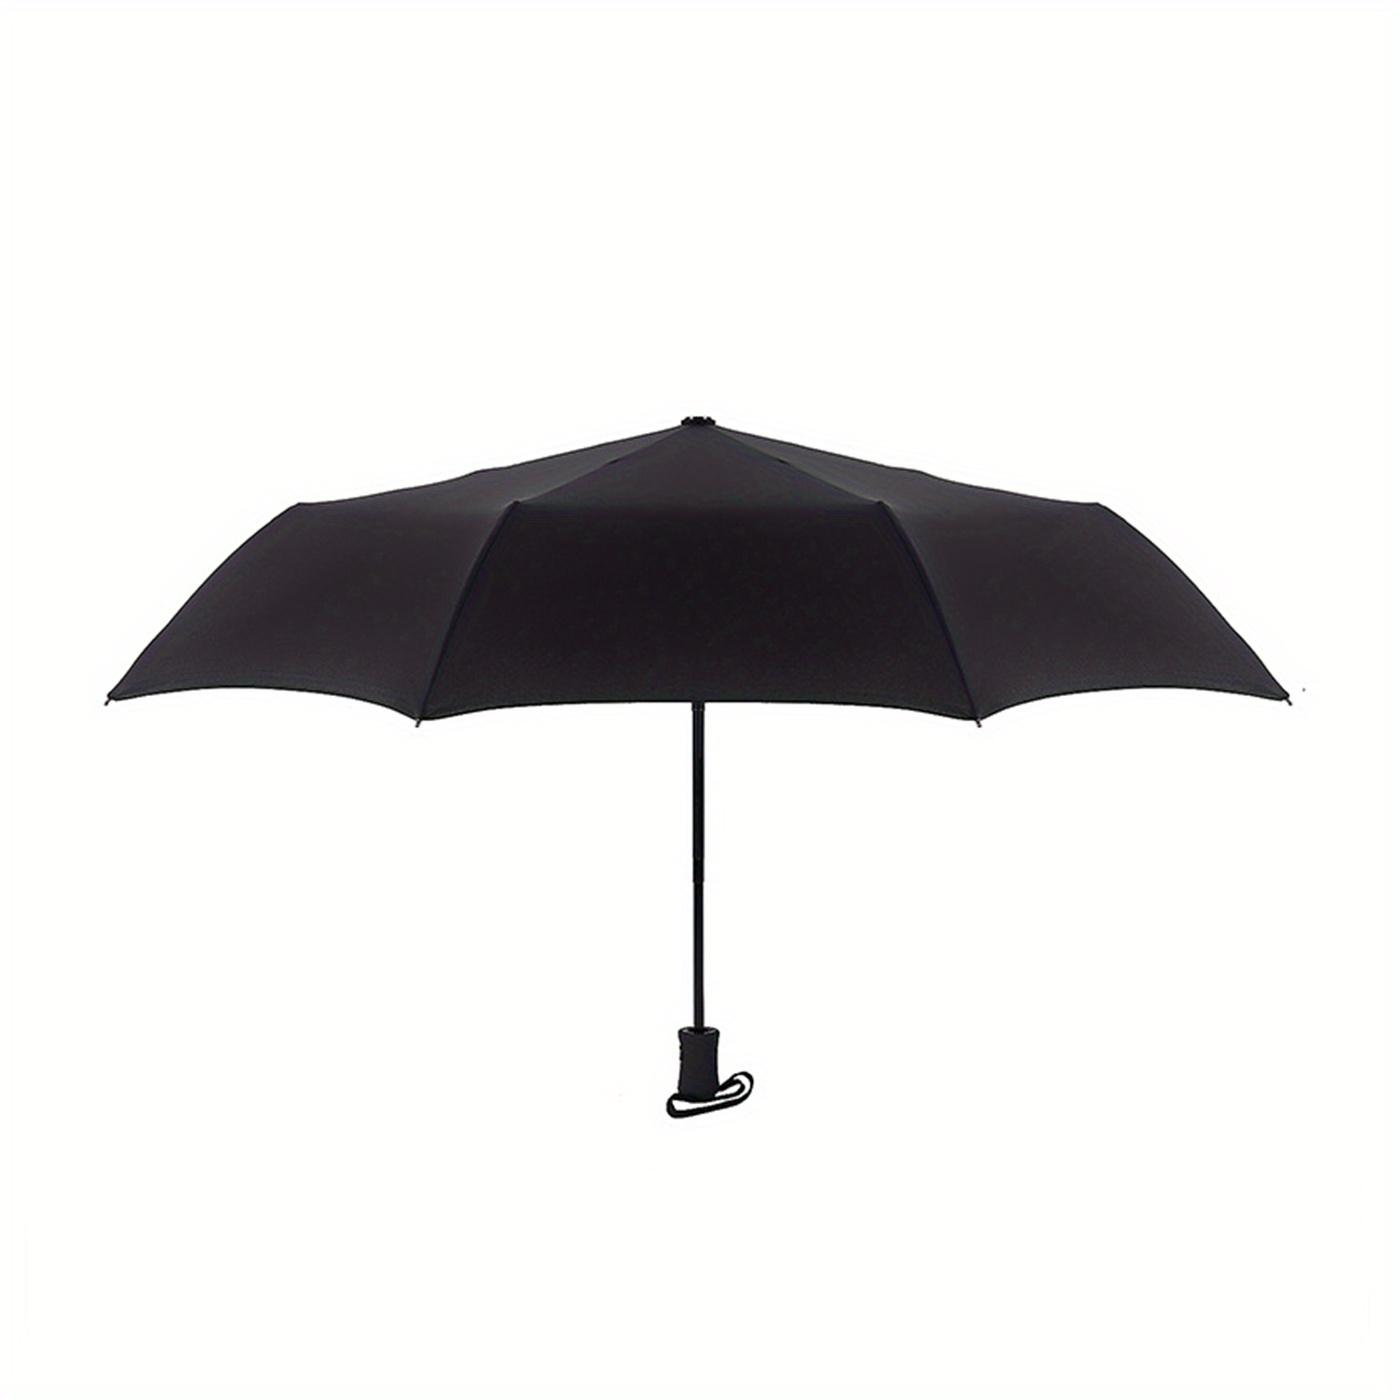 ZUOYOUZ Regenschirm Wasserdichter Reise-Regenschirm, kompakter